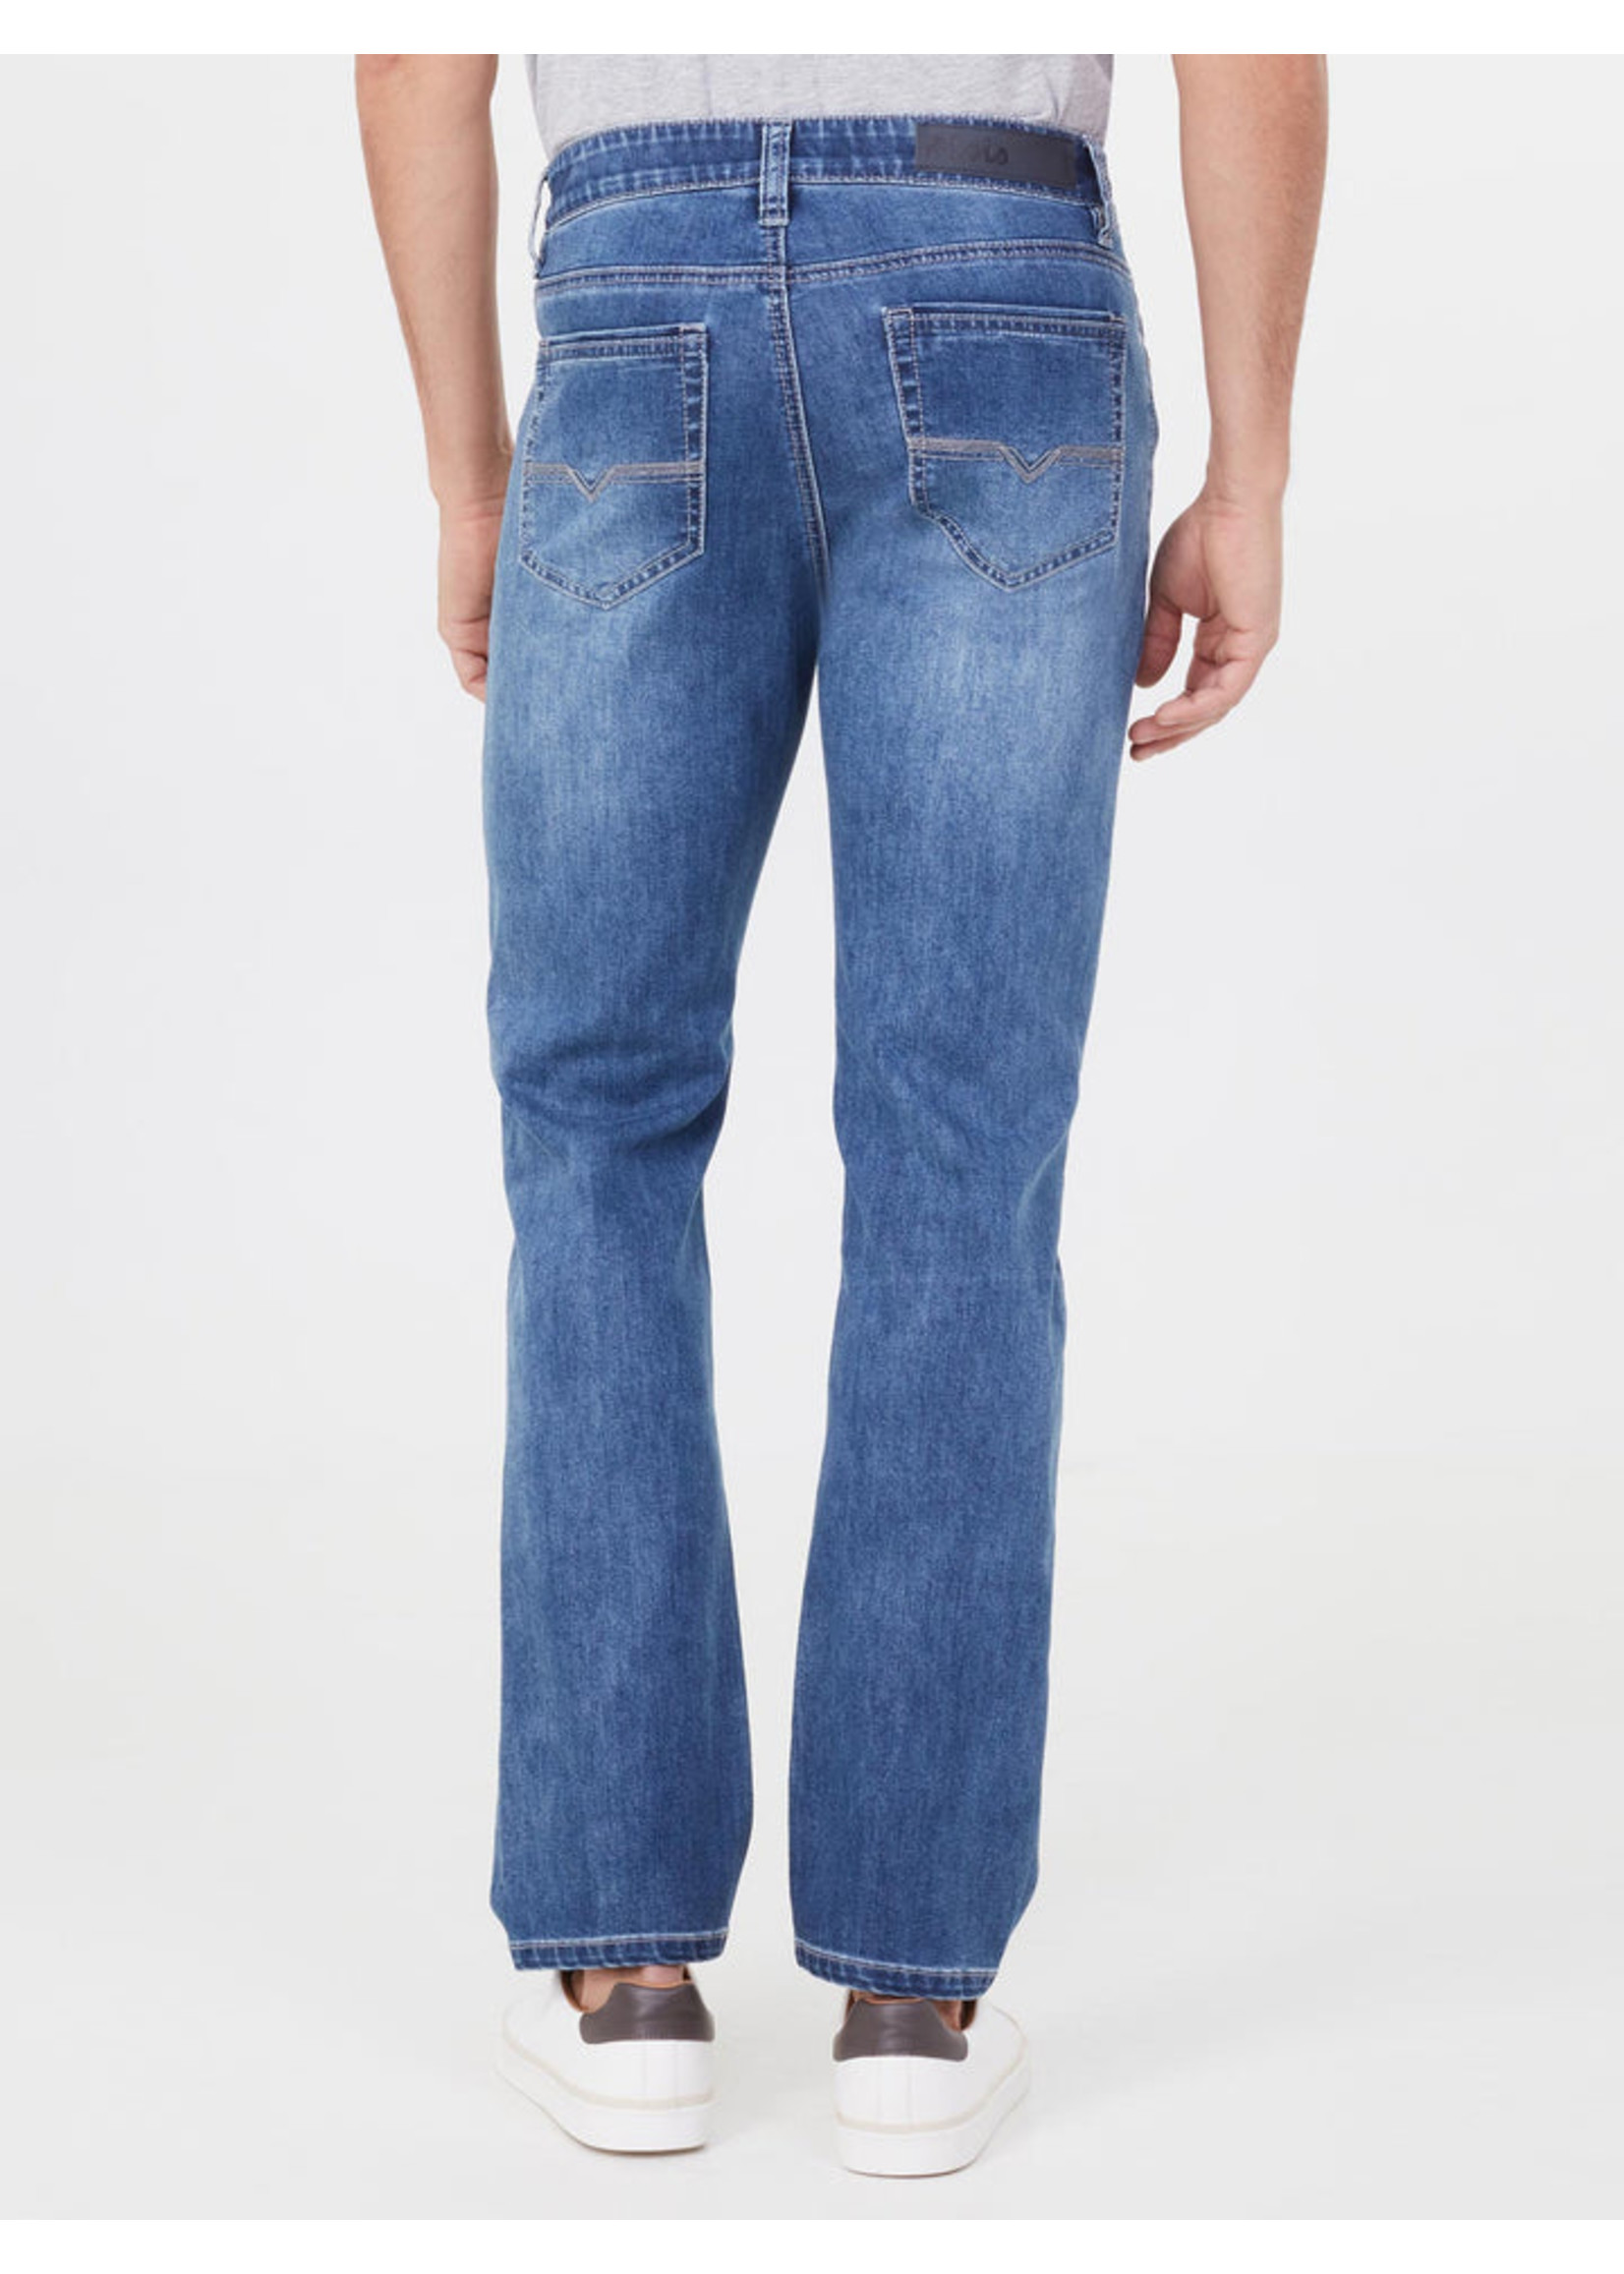 LOIS JEANS & JACKETS Jeans extensible coupe Peter slim-Homme